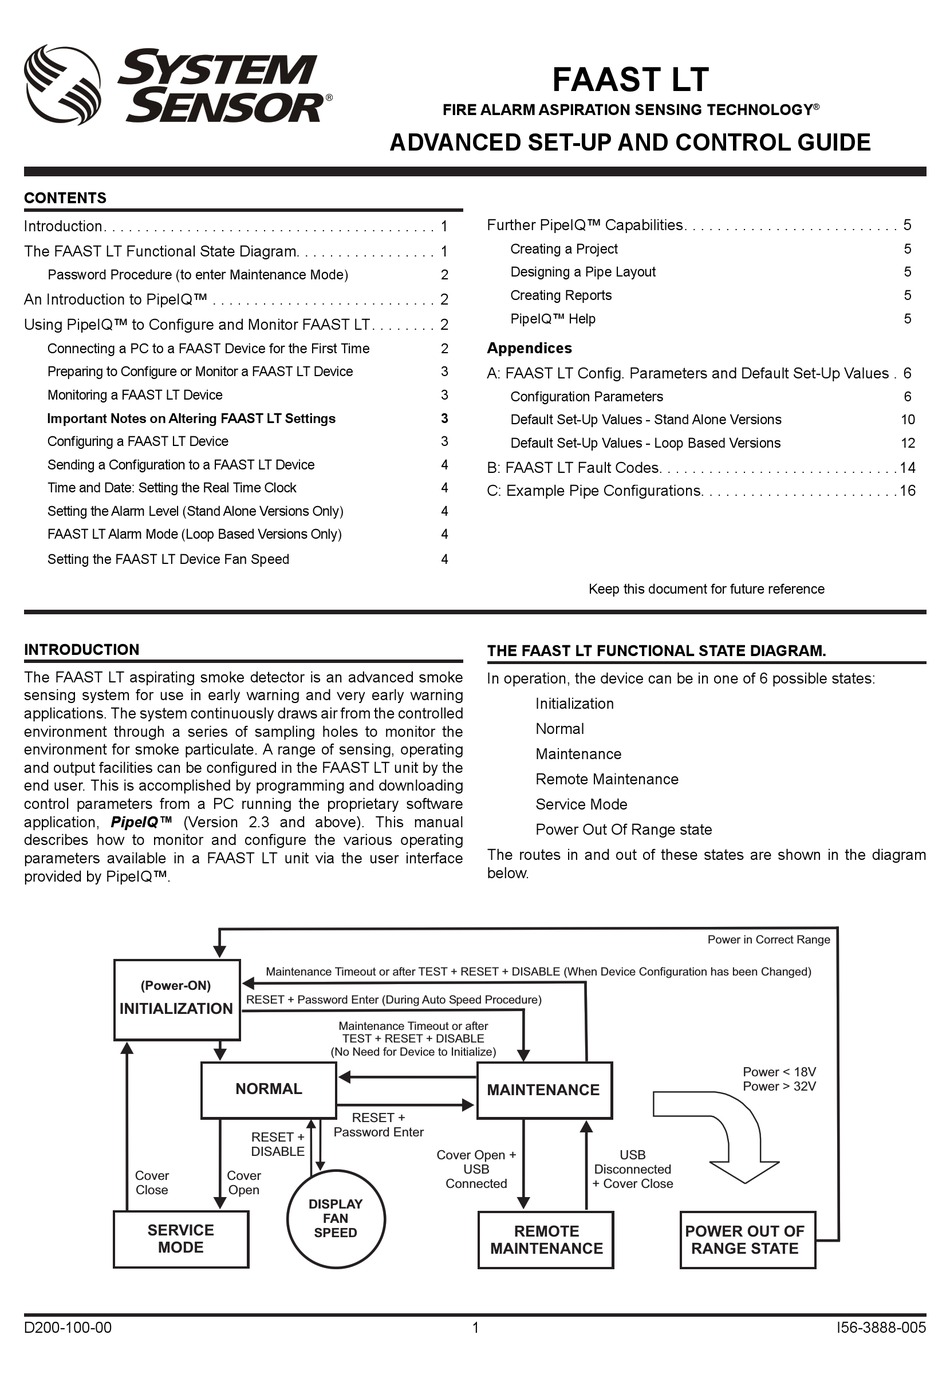 SYSTEM SENSOR FAAST LT CONTROL MANUAL Pdf Download | ManualsLib  System Sensor 2351e Smoke Detector Wiring Diagram    ManualsLib